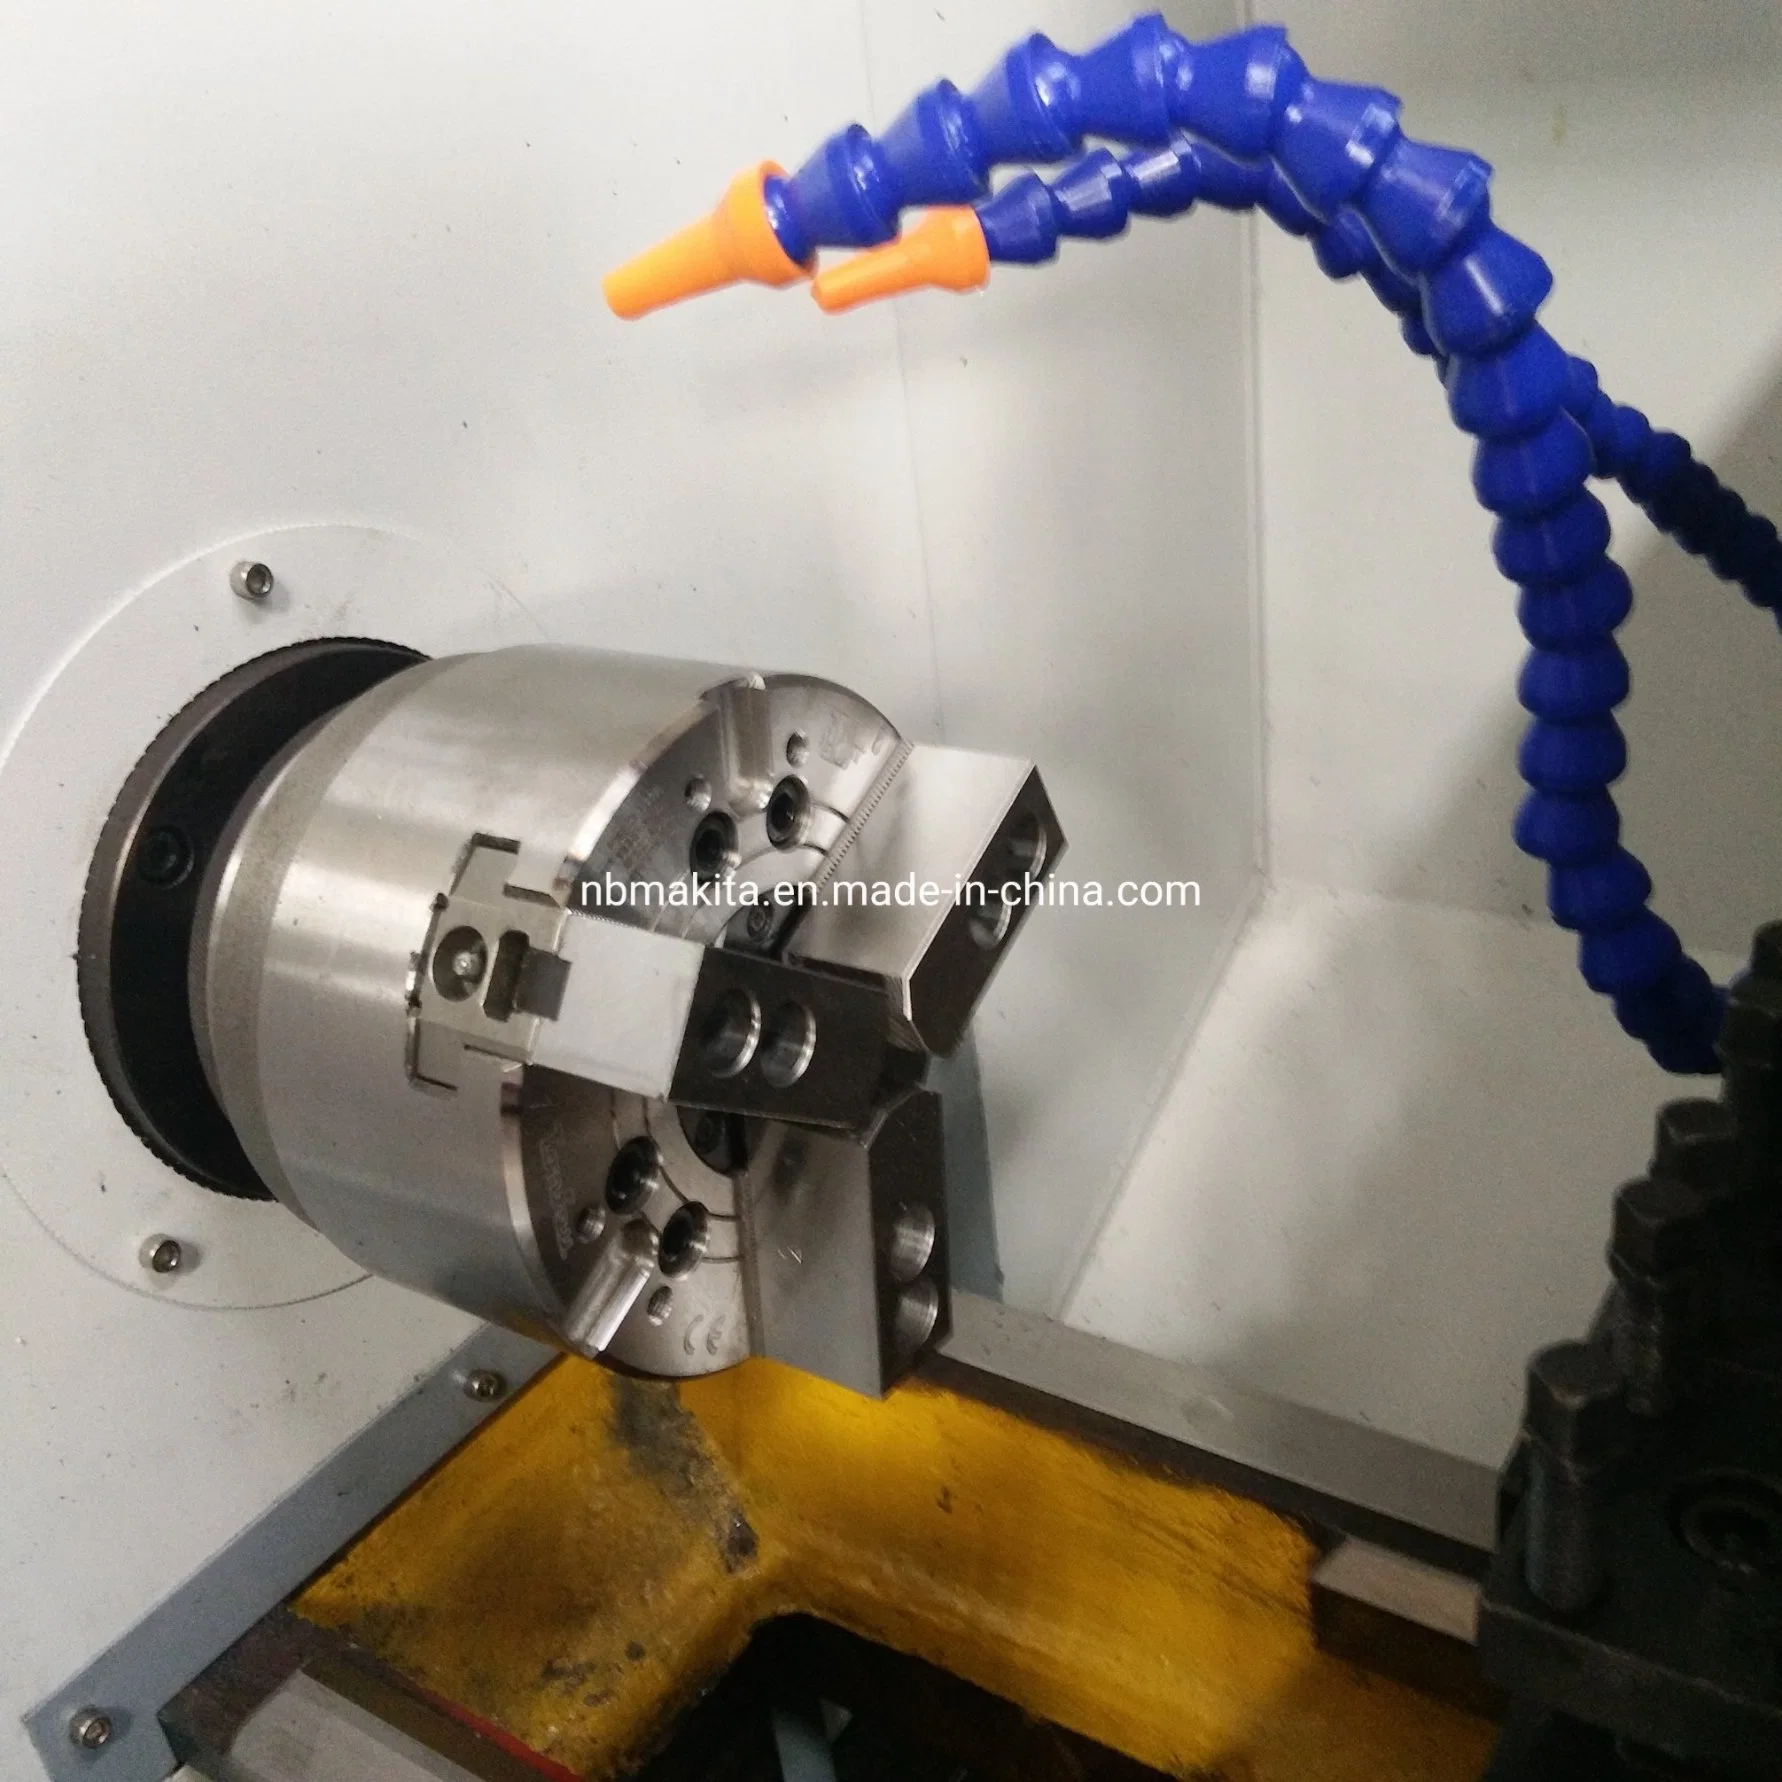 Flat Bed Economic Automatic Metal Cutting Precision CNC Machine Tools